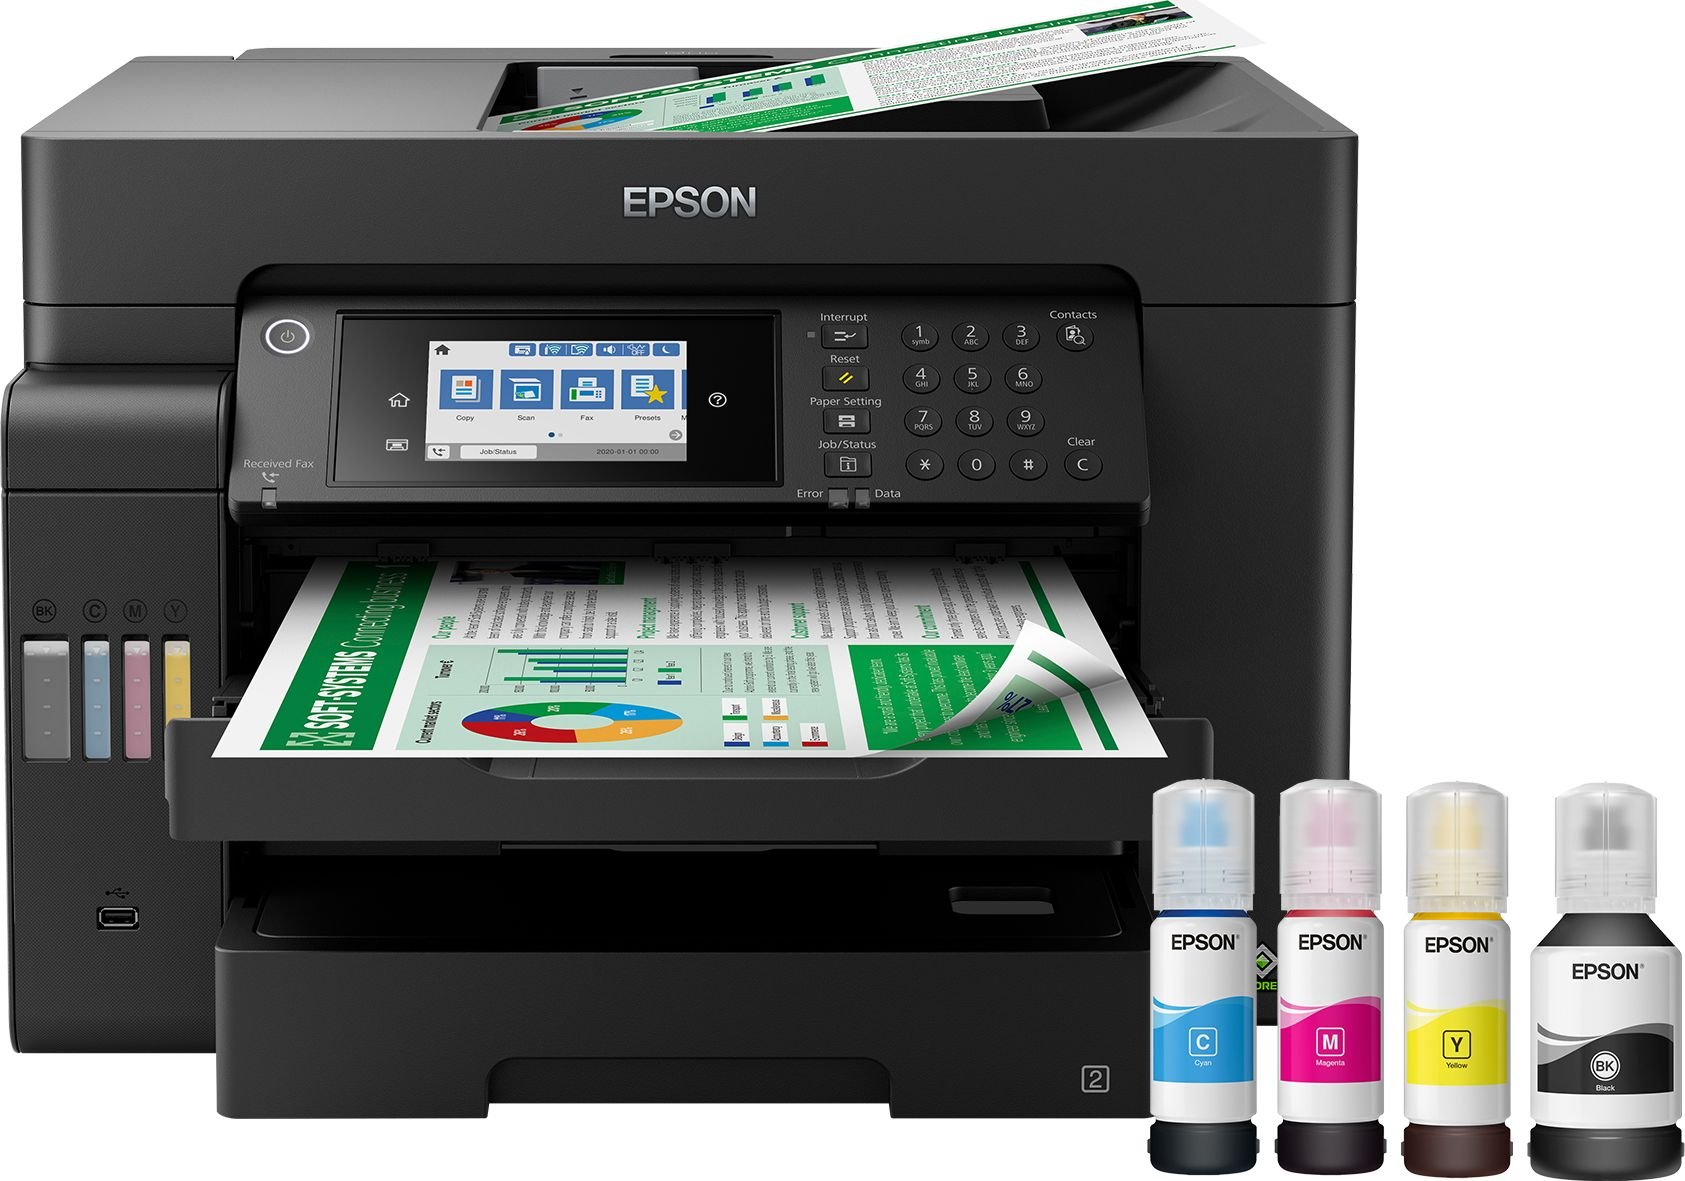 Imprimanta multifunctionala inkjet color Epson EcoTank L15150, Duplex, Retea, Wireless, A3